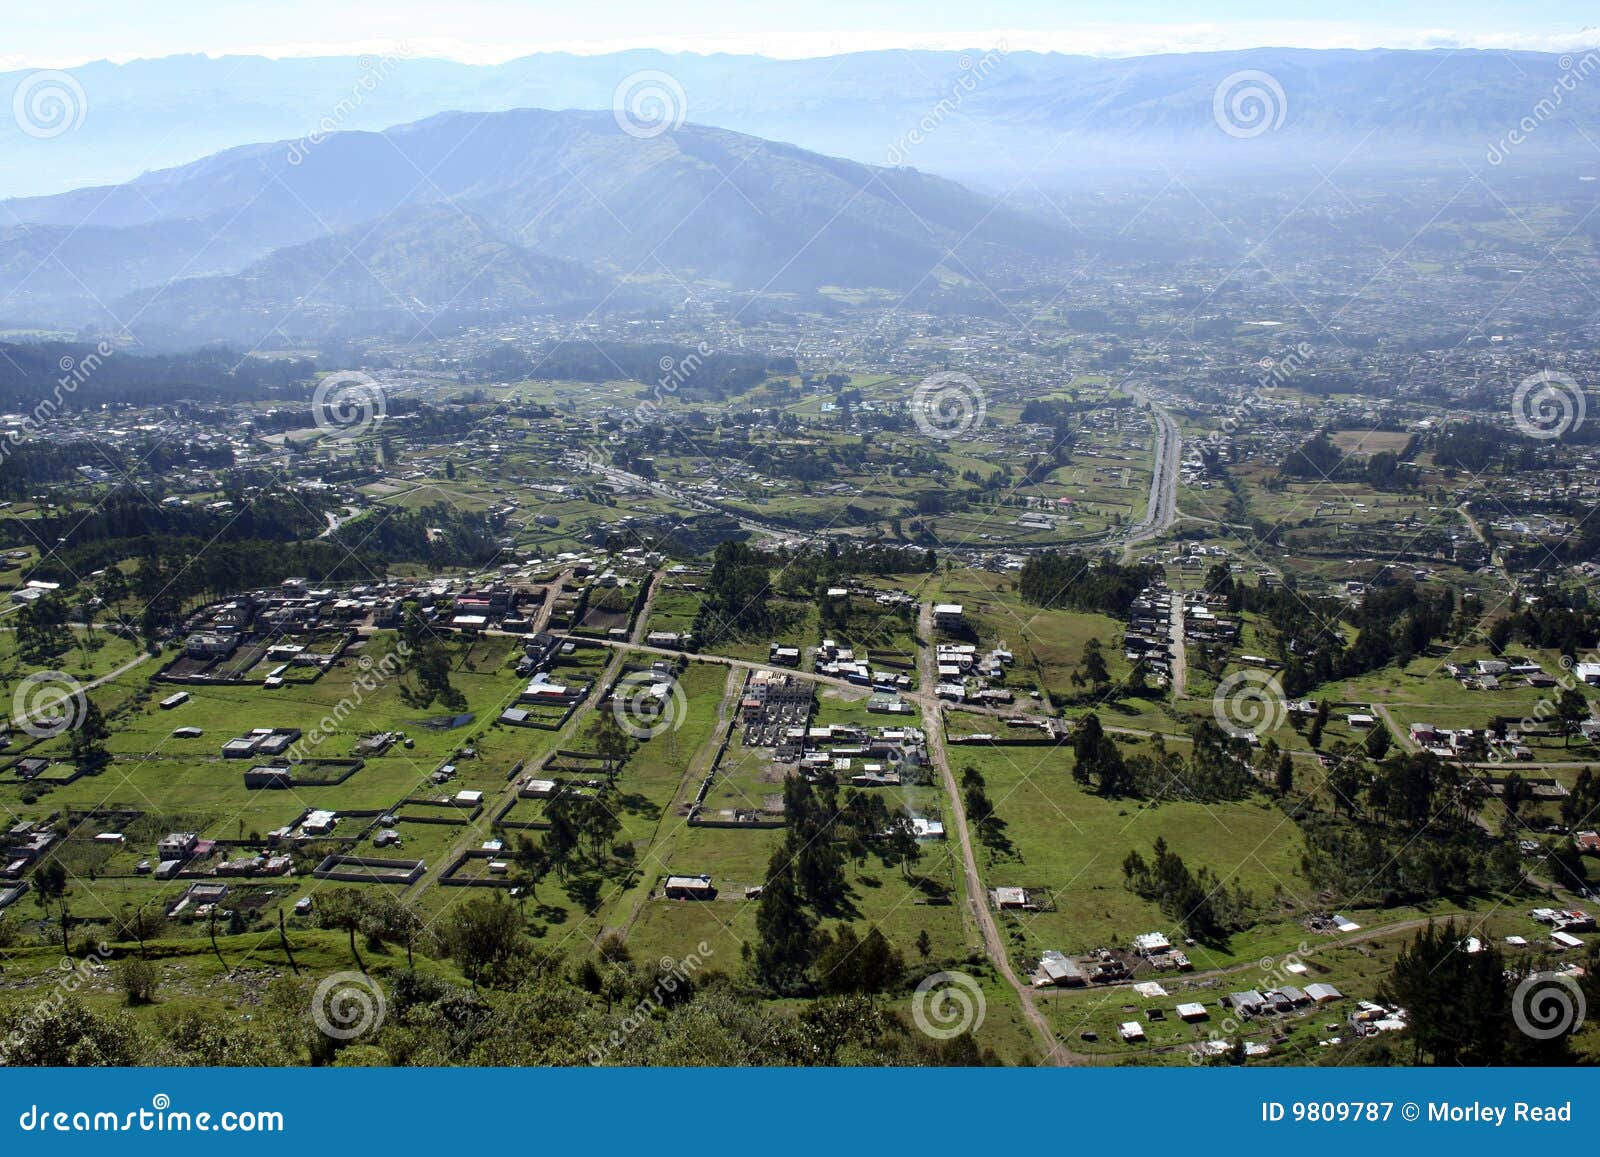 inter-andean valley